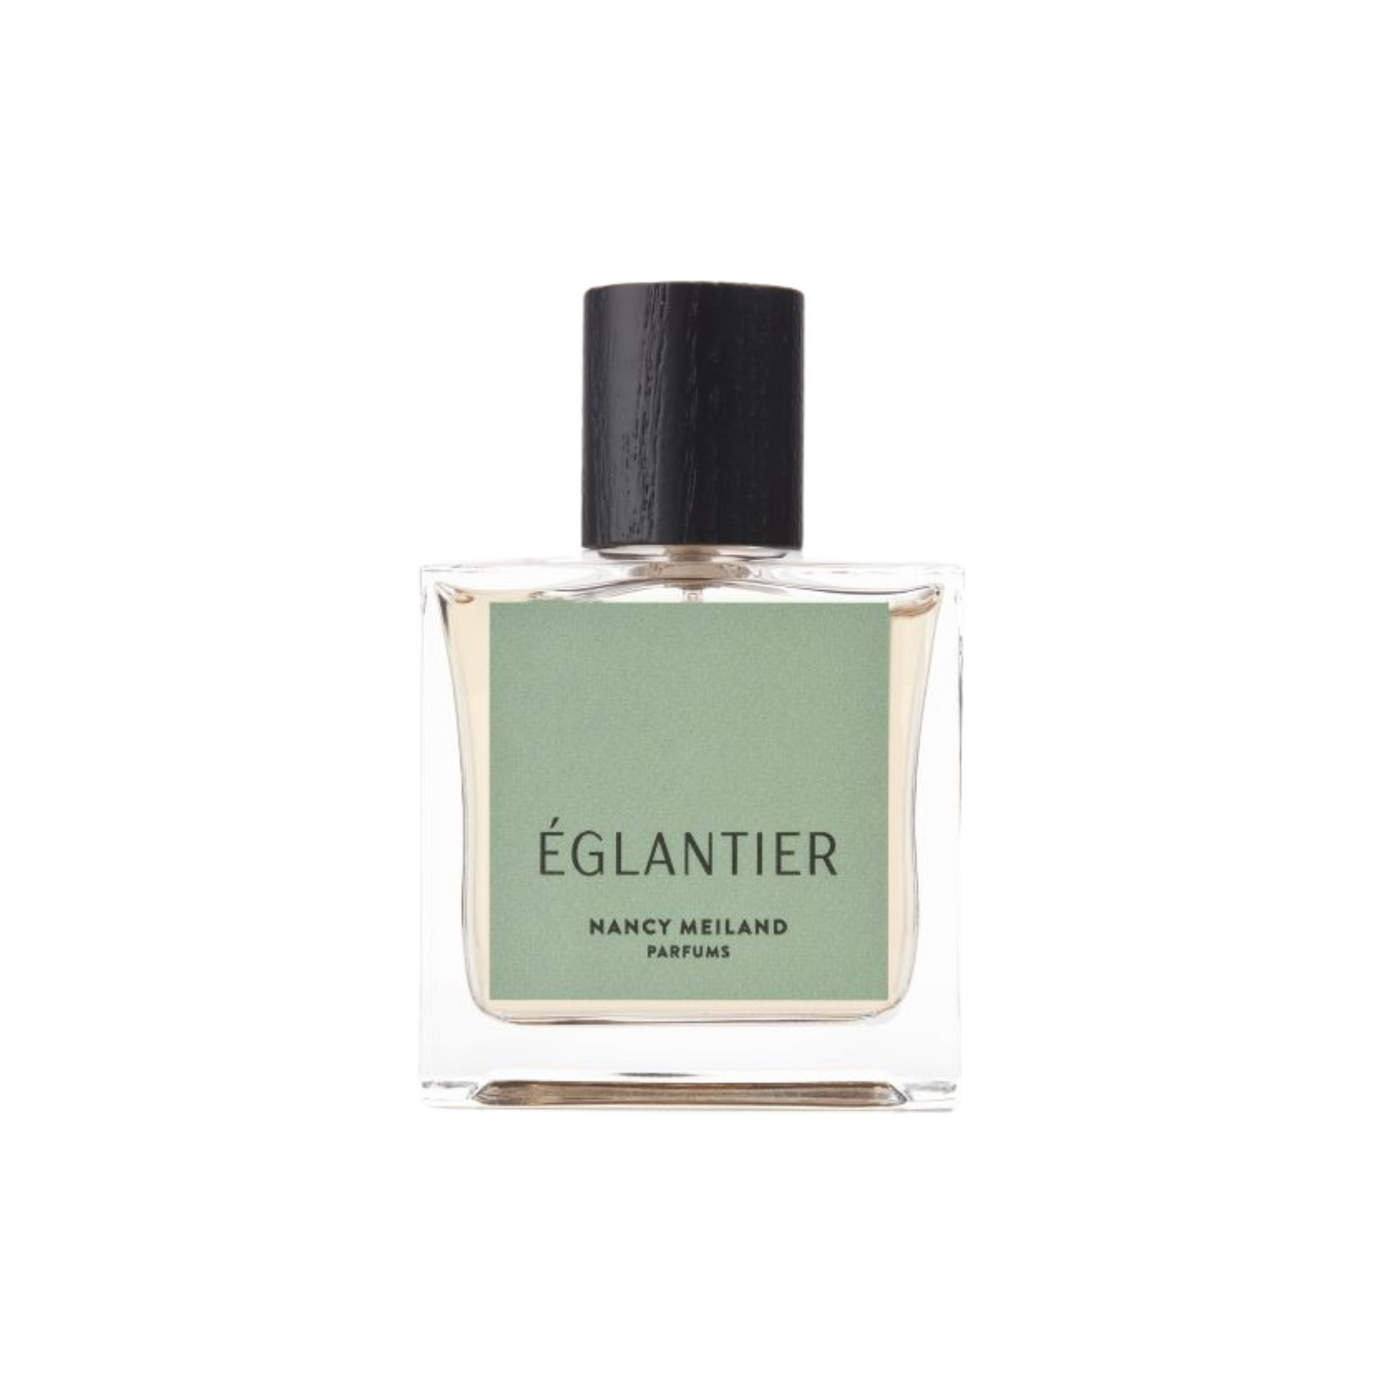 Nancy Meiland - Eglantier Parfum - Radical Giving